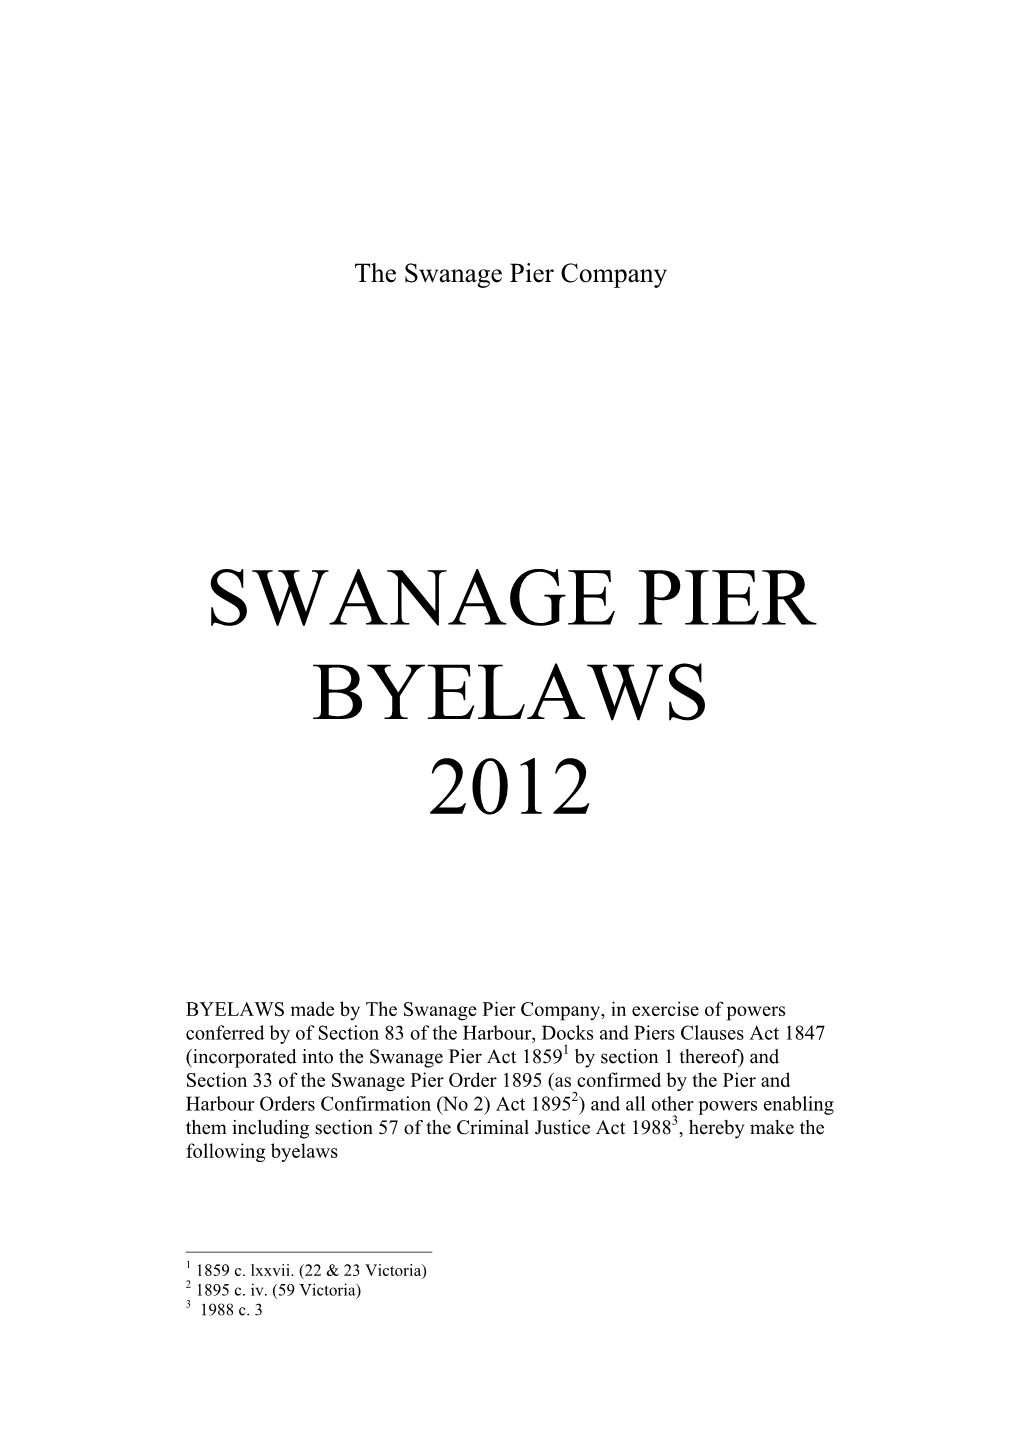 Swanage Pier Byelaws 2012